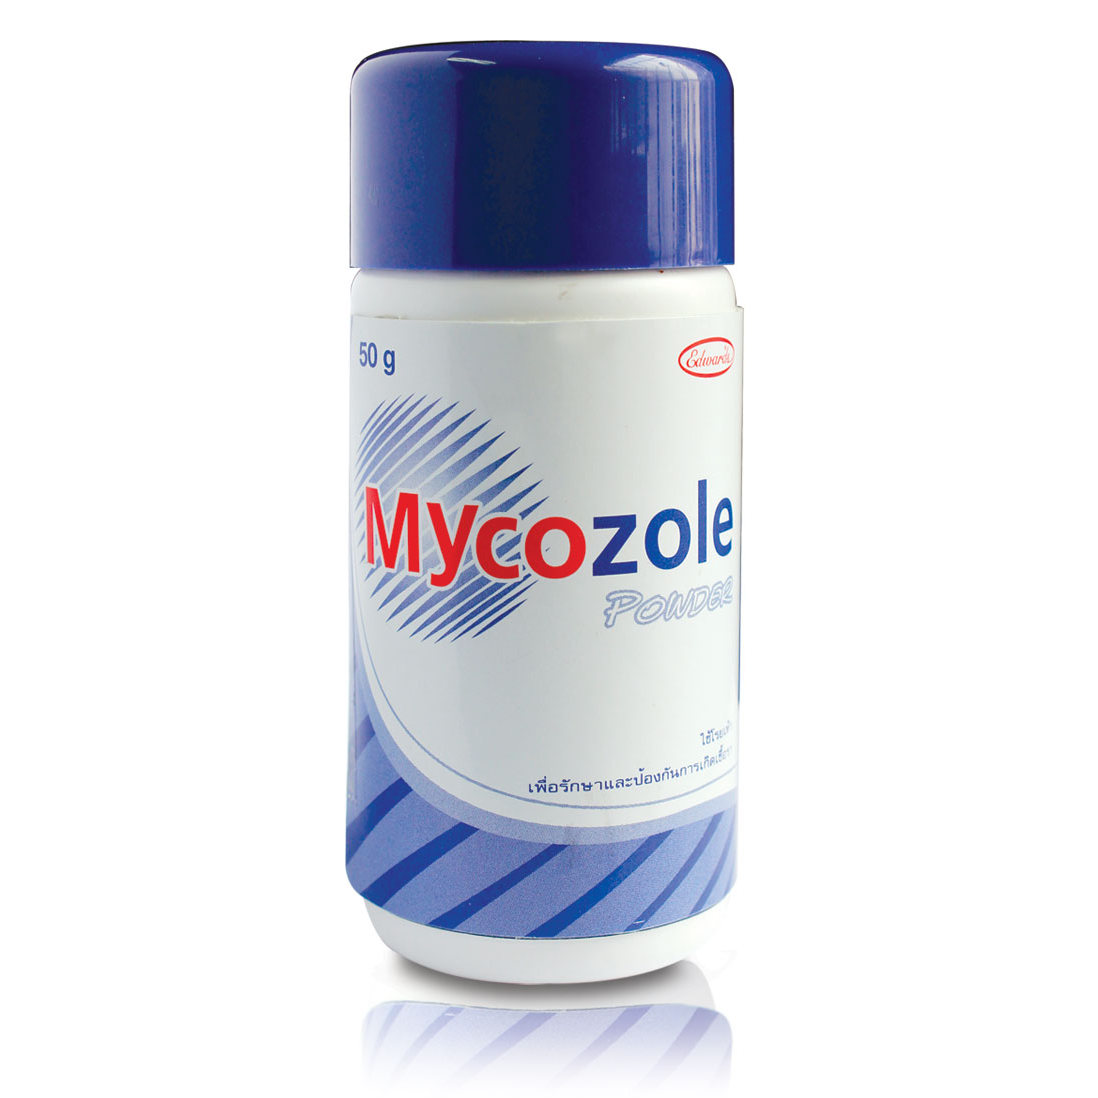 2 Box Mycozole powder แป้งโรยกลาก เกลื้อน เชื้อราในร่มผ้า ดับกลิ่นเท้า ลดอับชื้น 50g